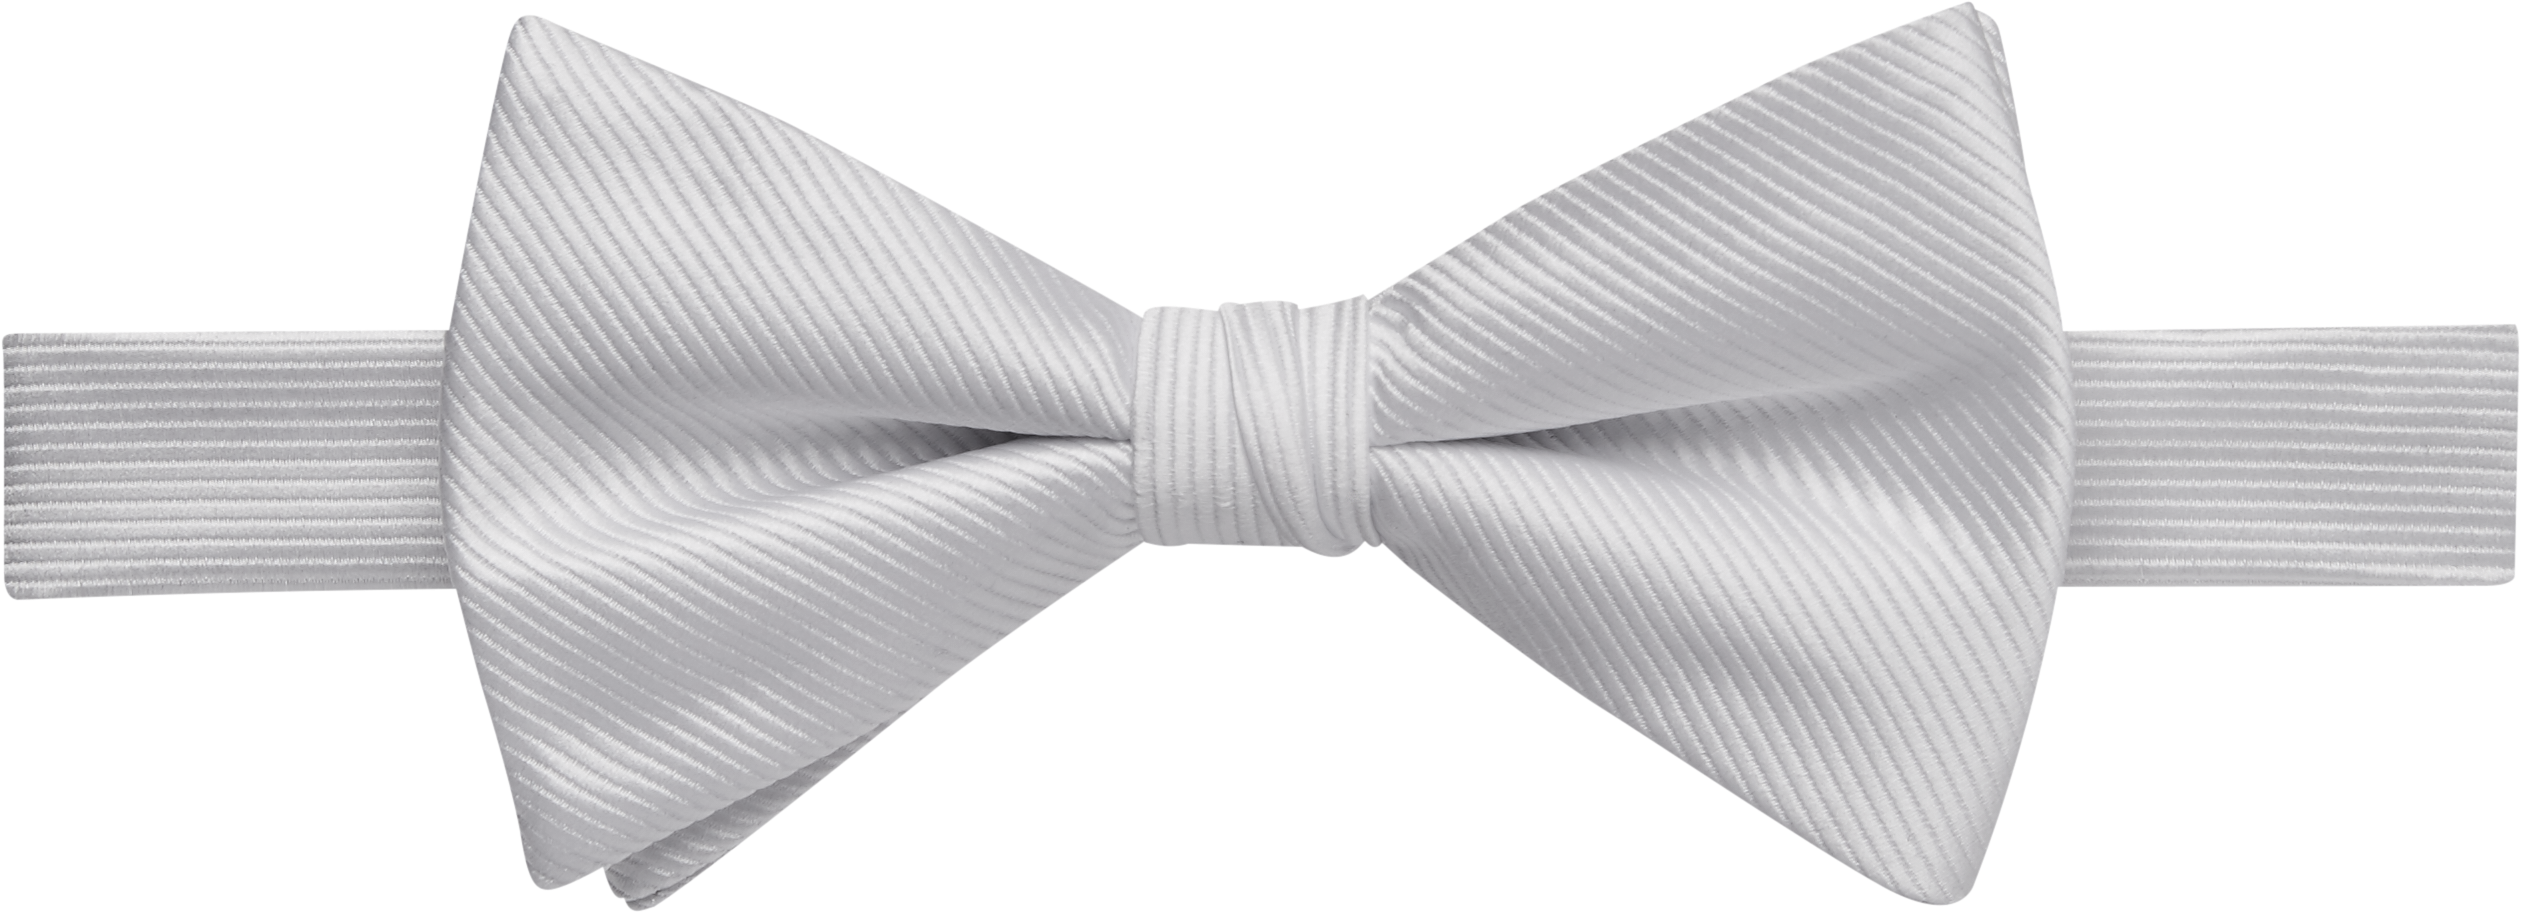 gray bow tie